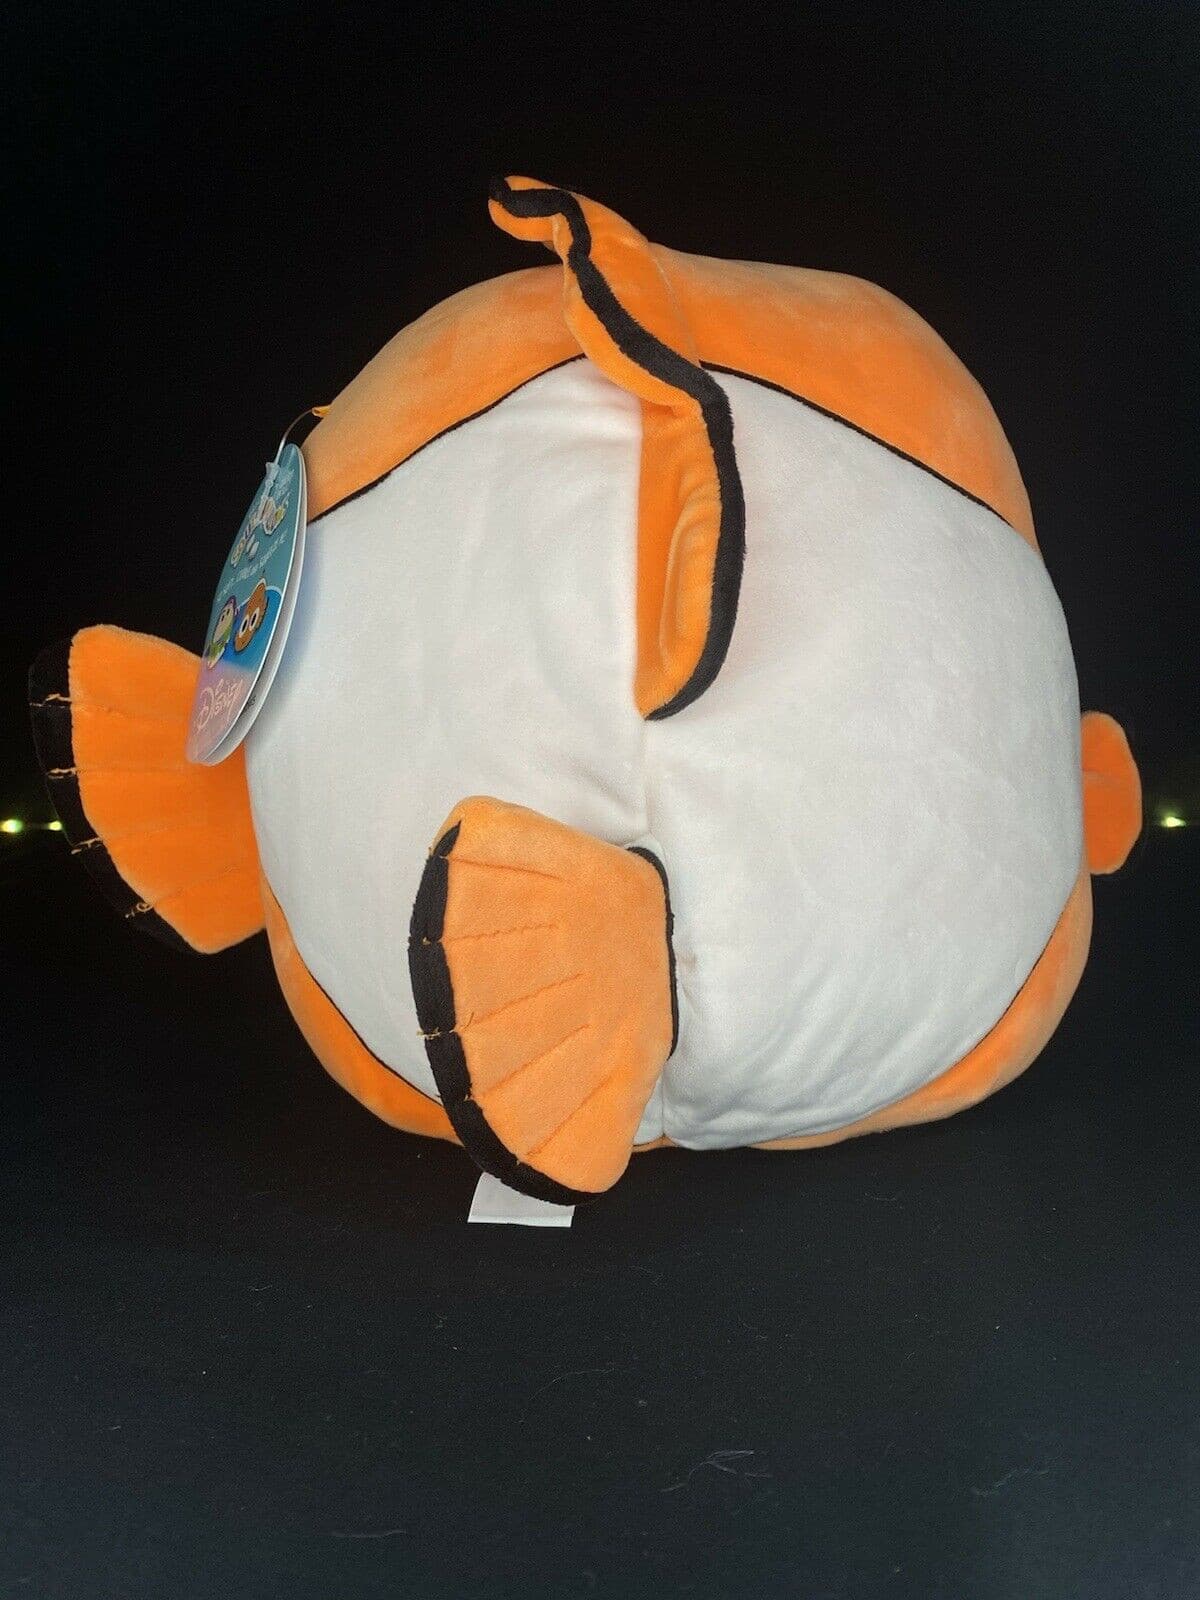 Squishmallow 10" Disney Pixar Nemo the Clownfish | Sweet Magnolia Charms.